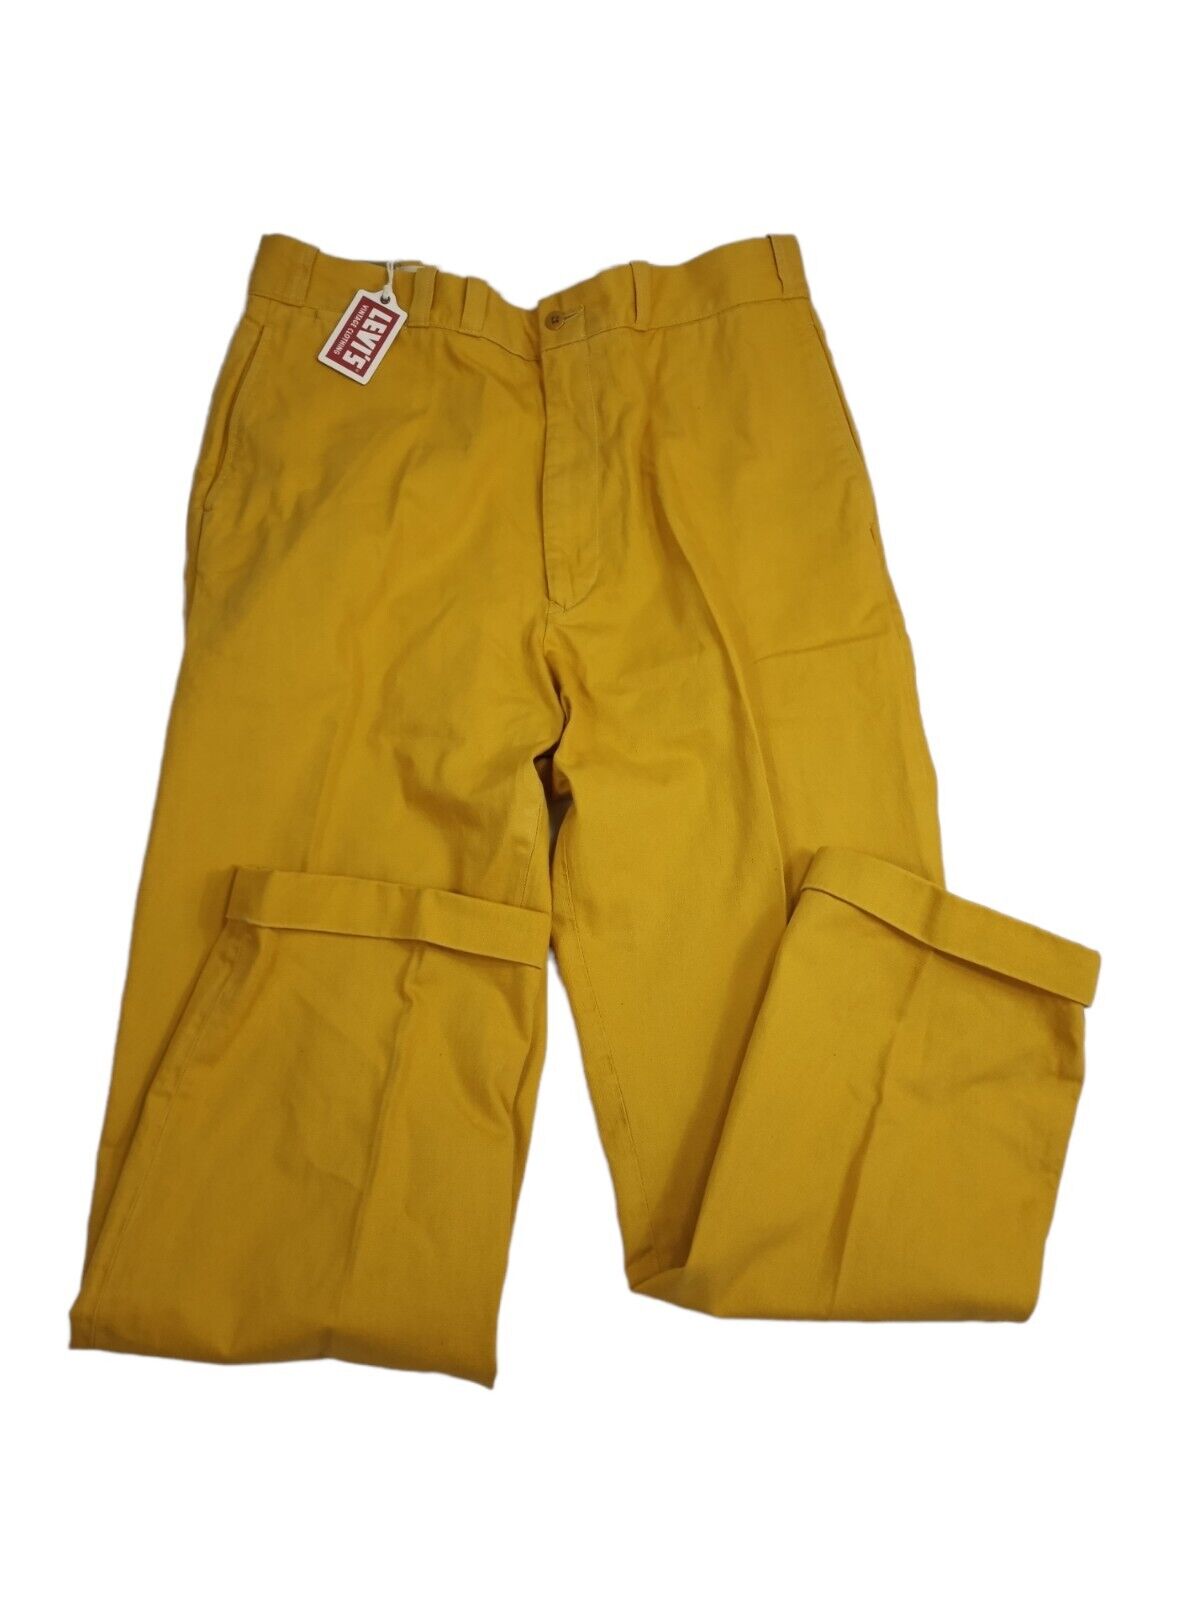 Levi’s Vintage Clothing Men Tab Twills Chino Pants Trousers Mustard Yellow  38x30